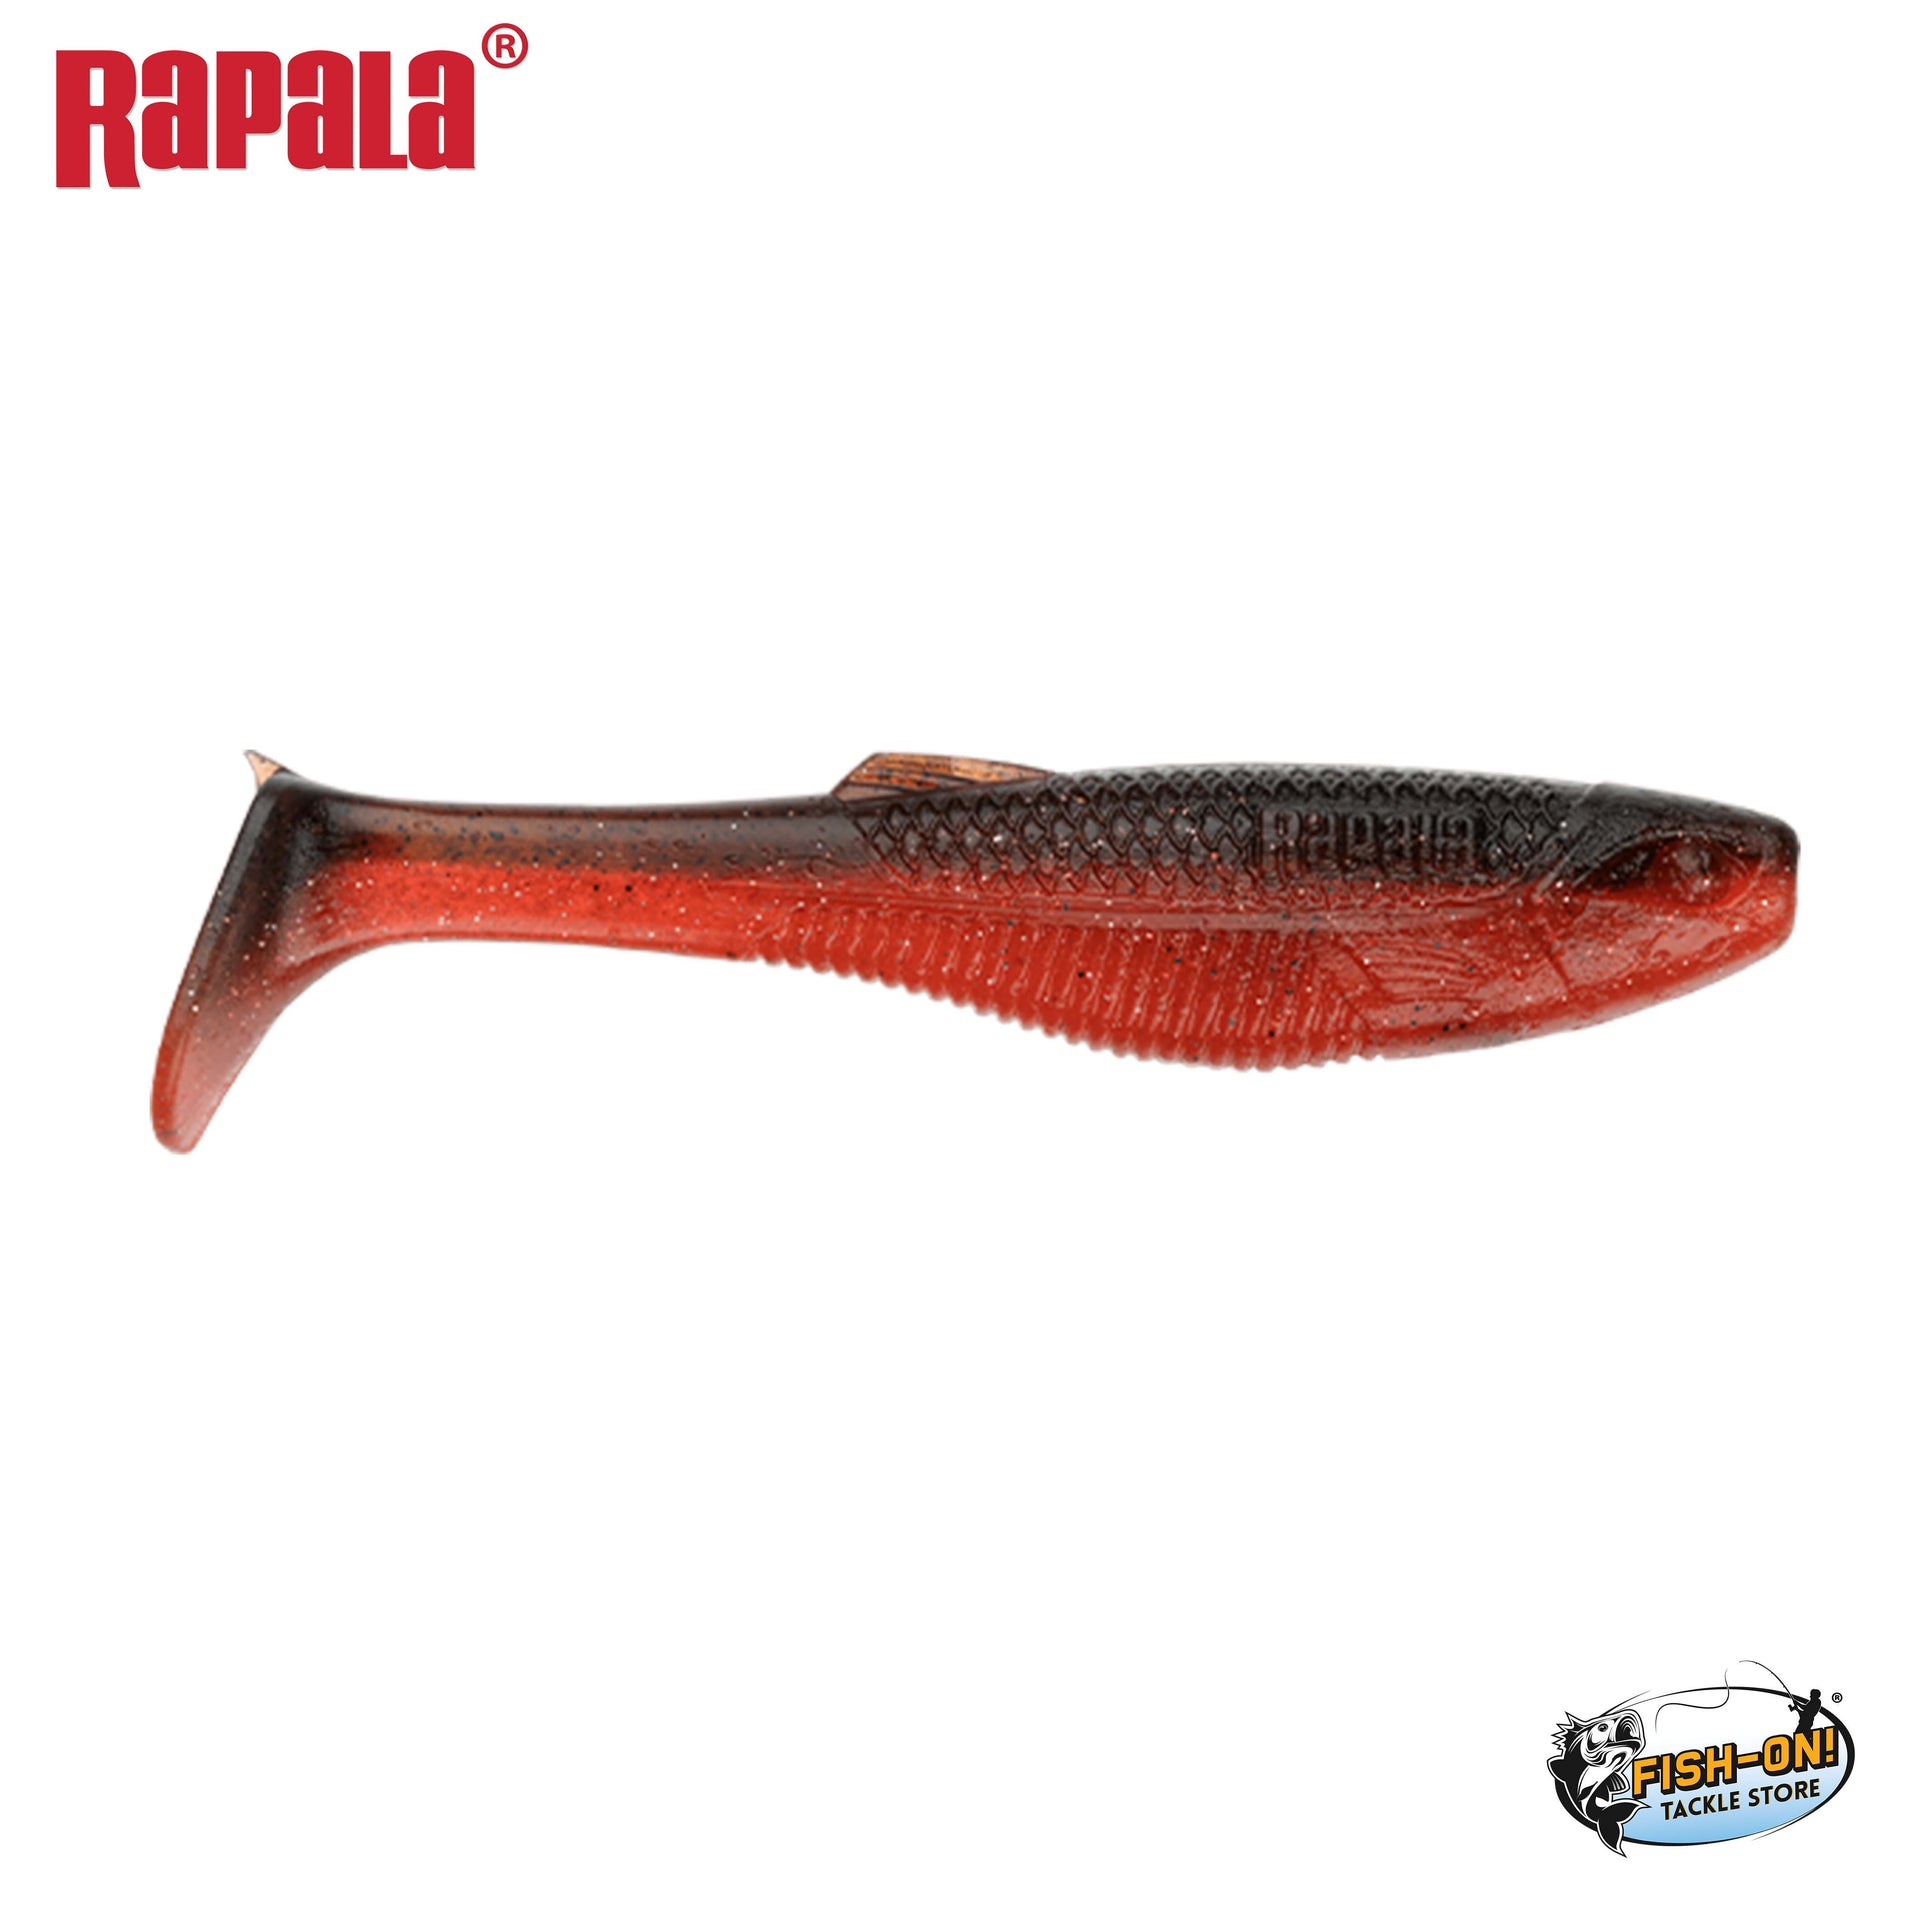 Rapala Crush City 'Heavy Hitter 4 – Fish-On Tackle Store